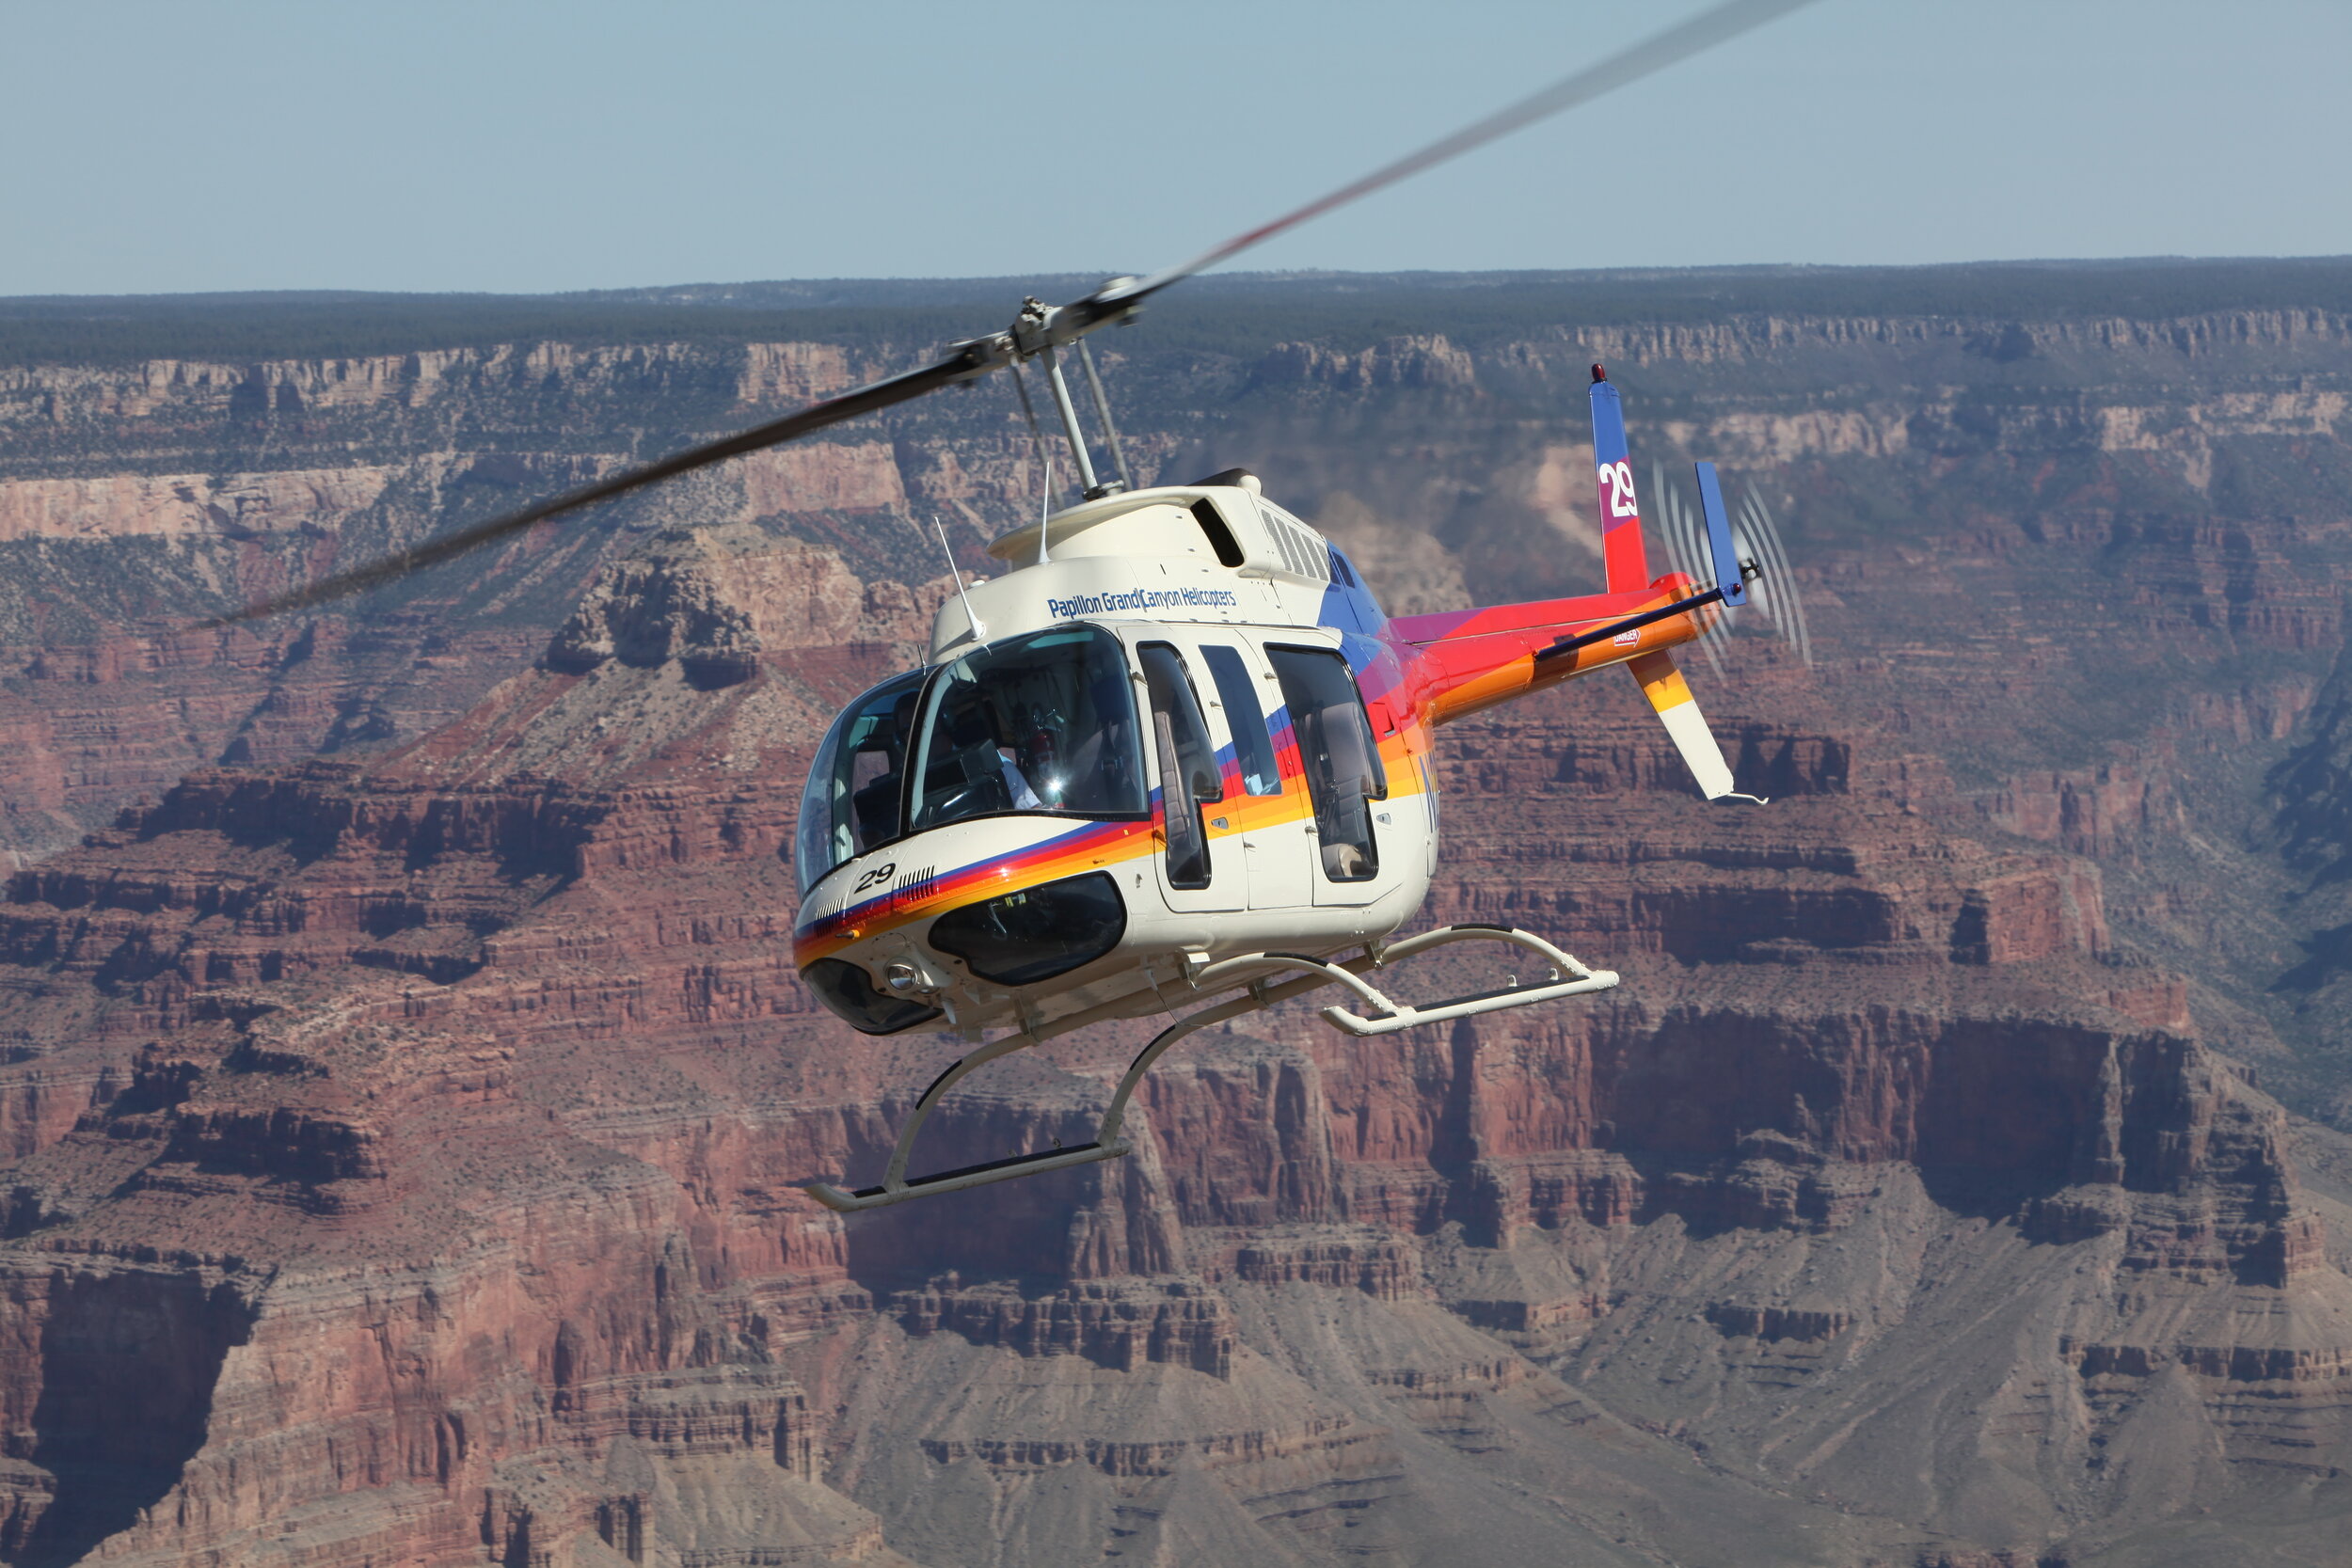 Las Vegas Night Flight – Grand Canyon Tour Company